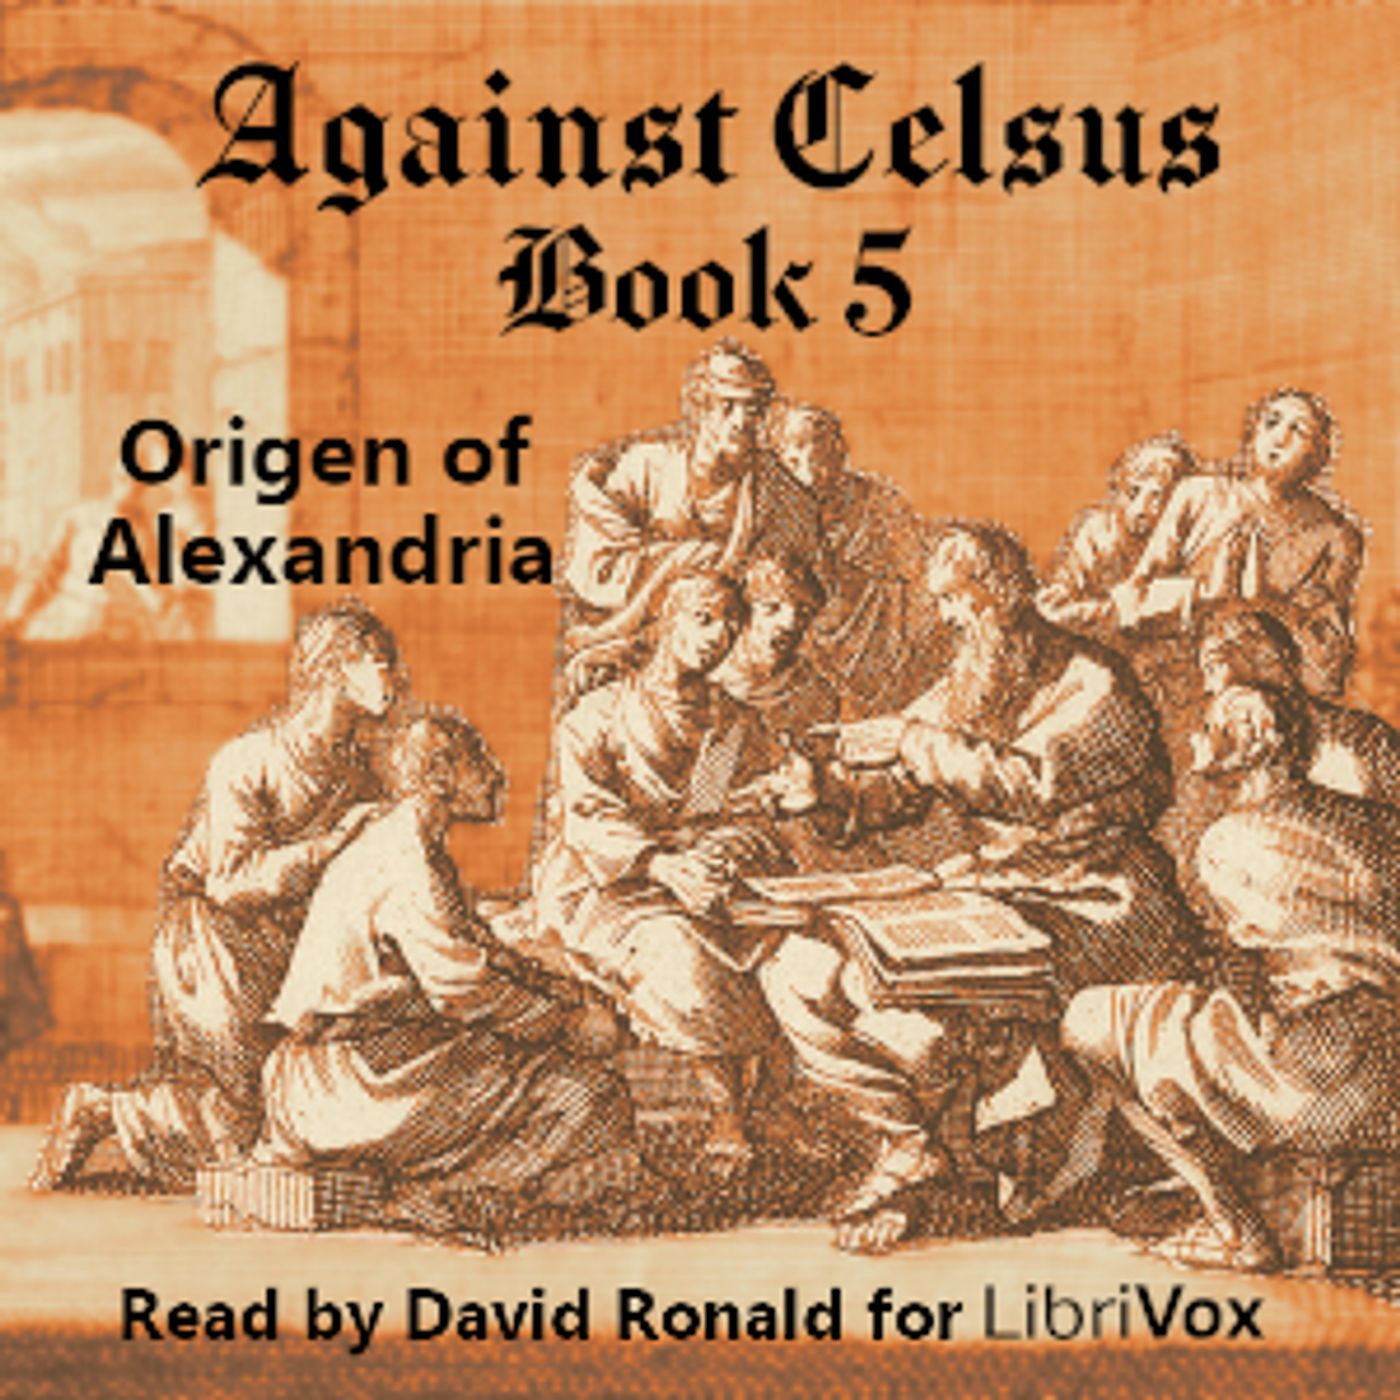 Against Celsus Book 5 by Origen of Alexandria (184 – 253)